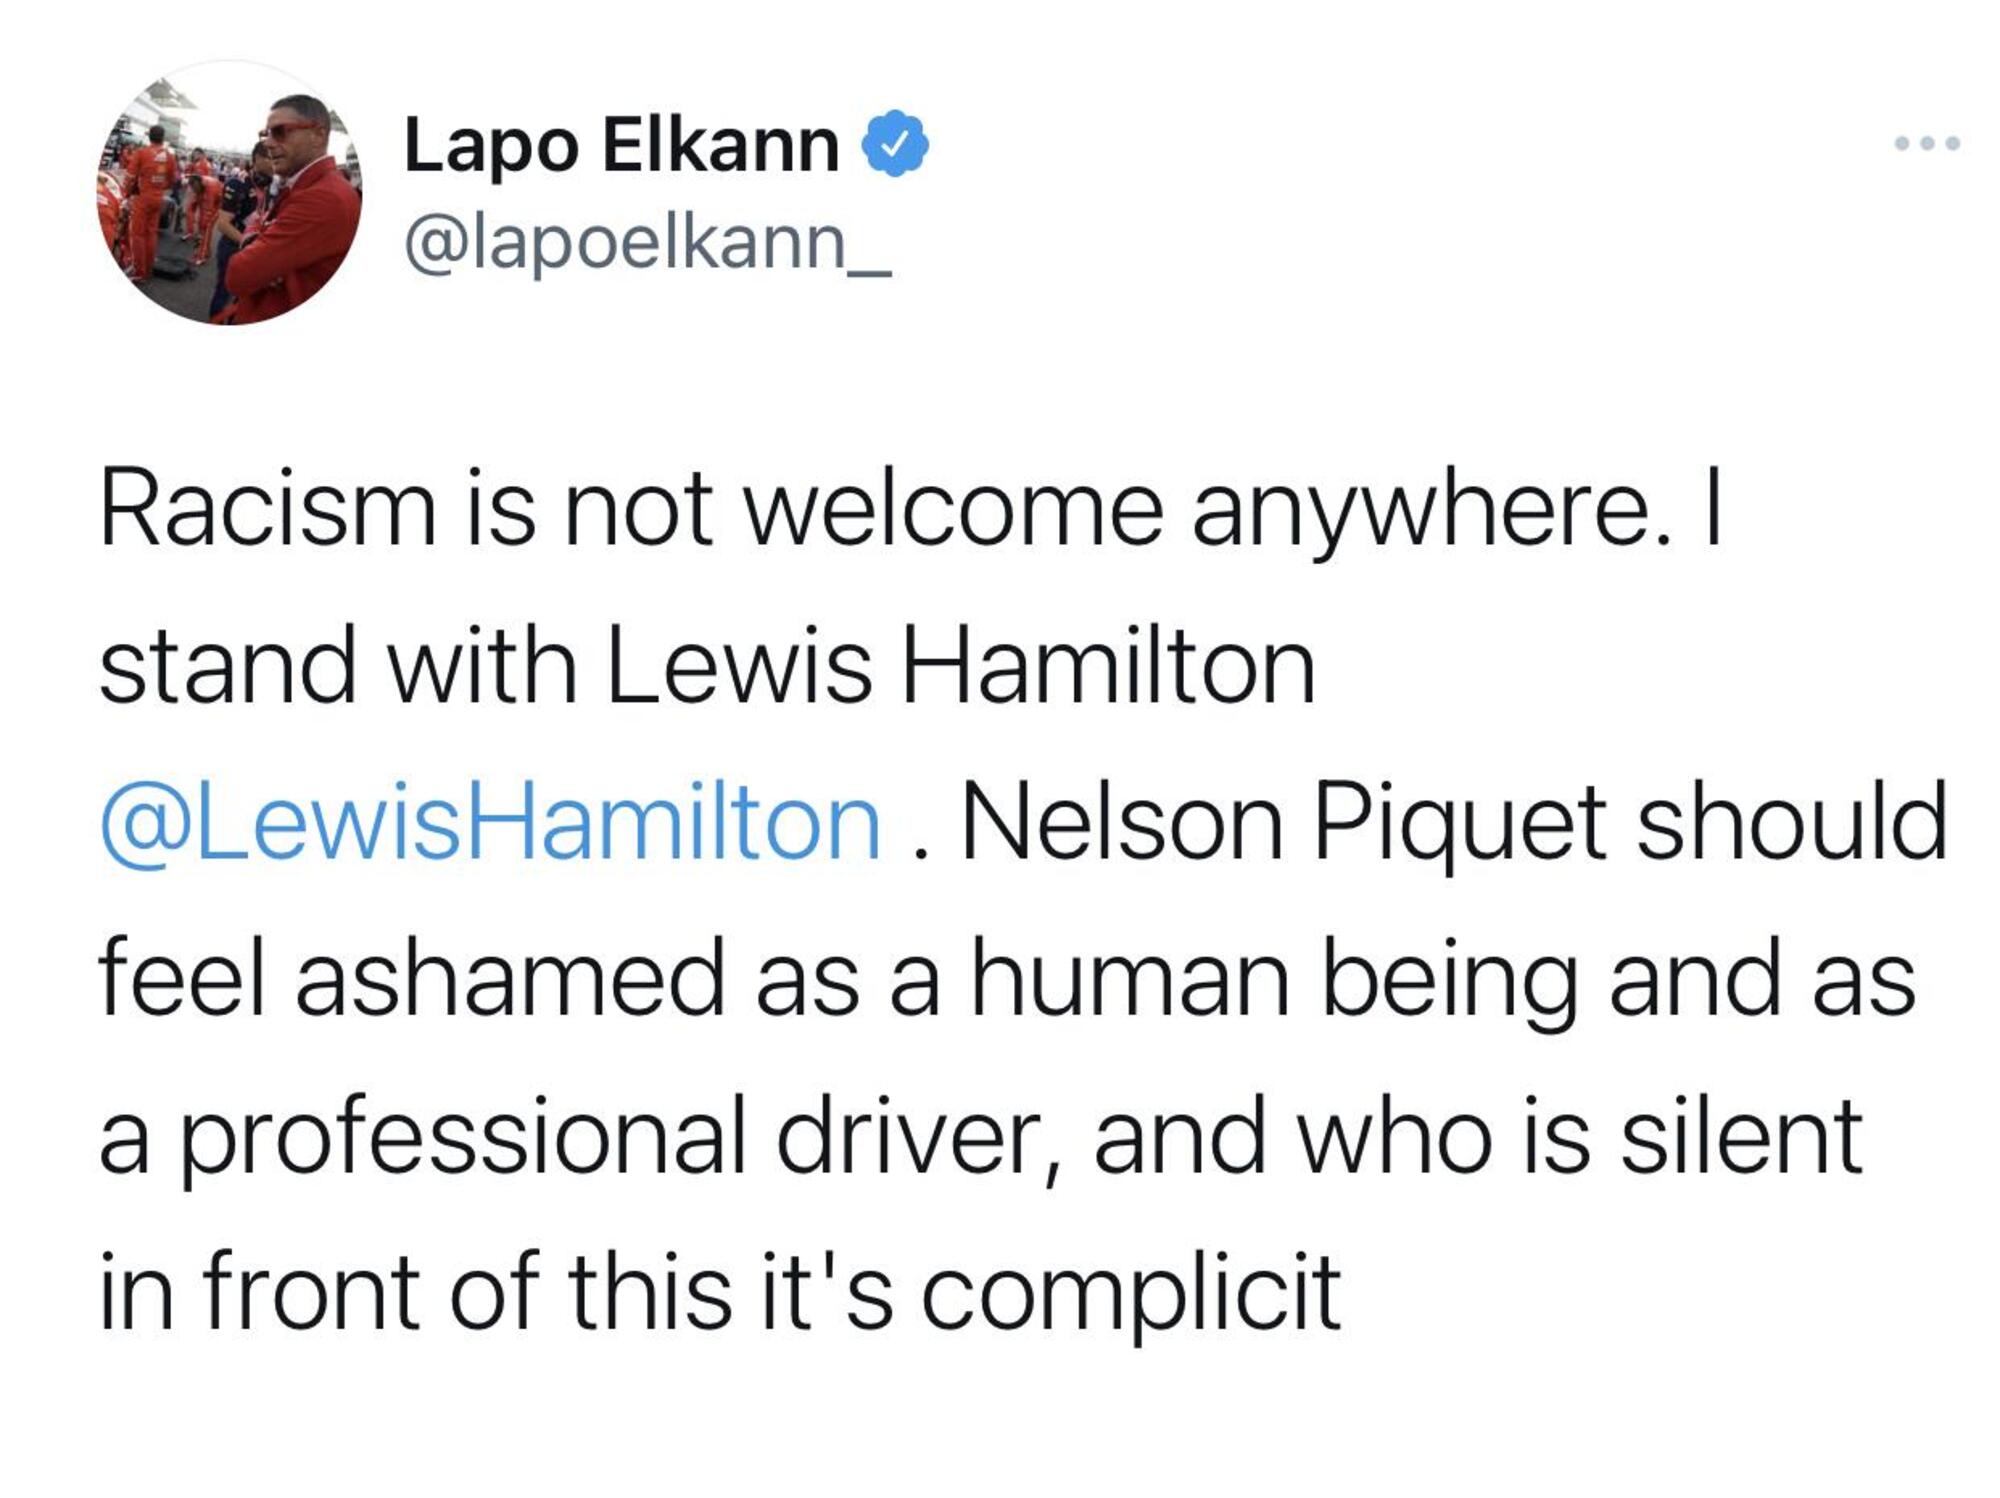 tweet di Lapo Elkann contro Piquet